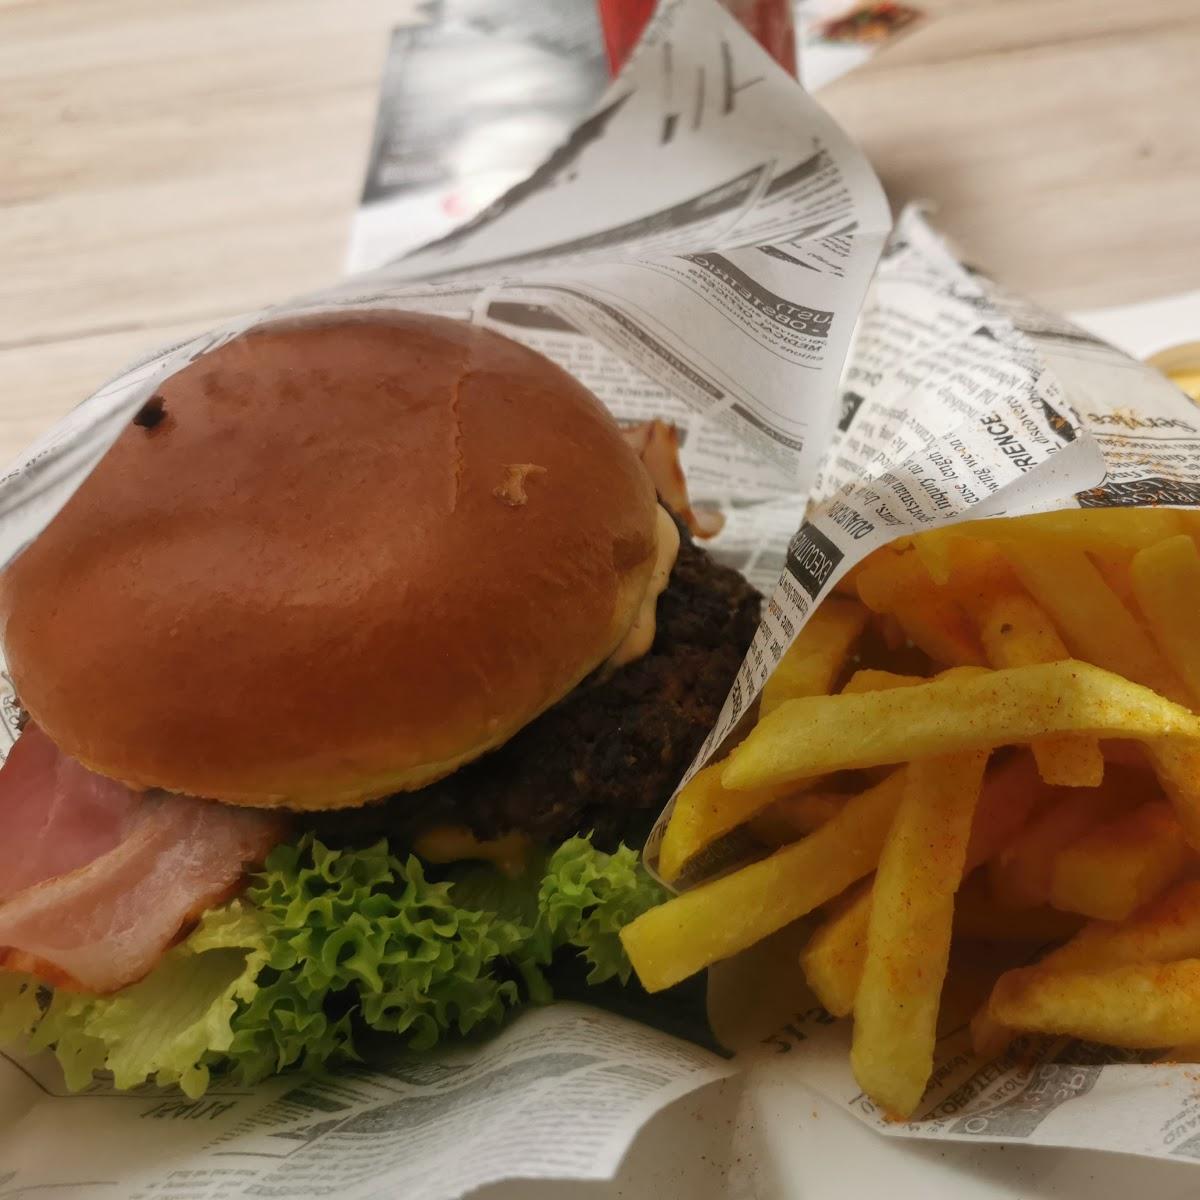 Restaurant "Arizona Burger" in Straubing